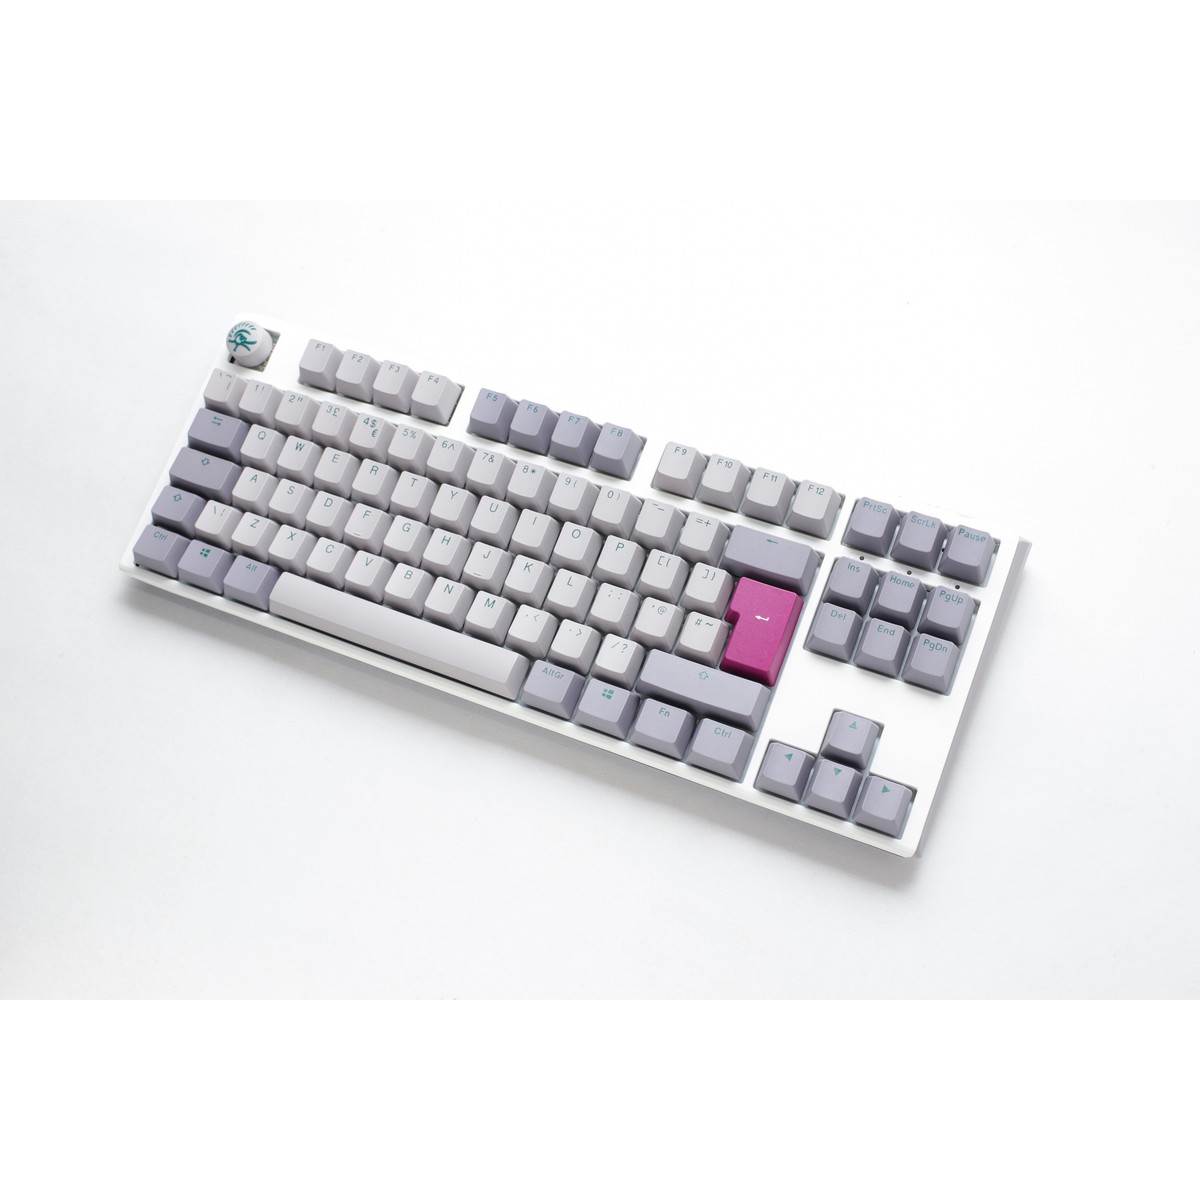 Ducky - Ducky One 3 Mist TKL 80% USB RGB Mechanical Gaming Keyboard Cherry MX Speed Silver Switch - UK Layout